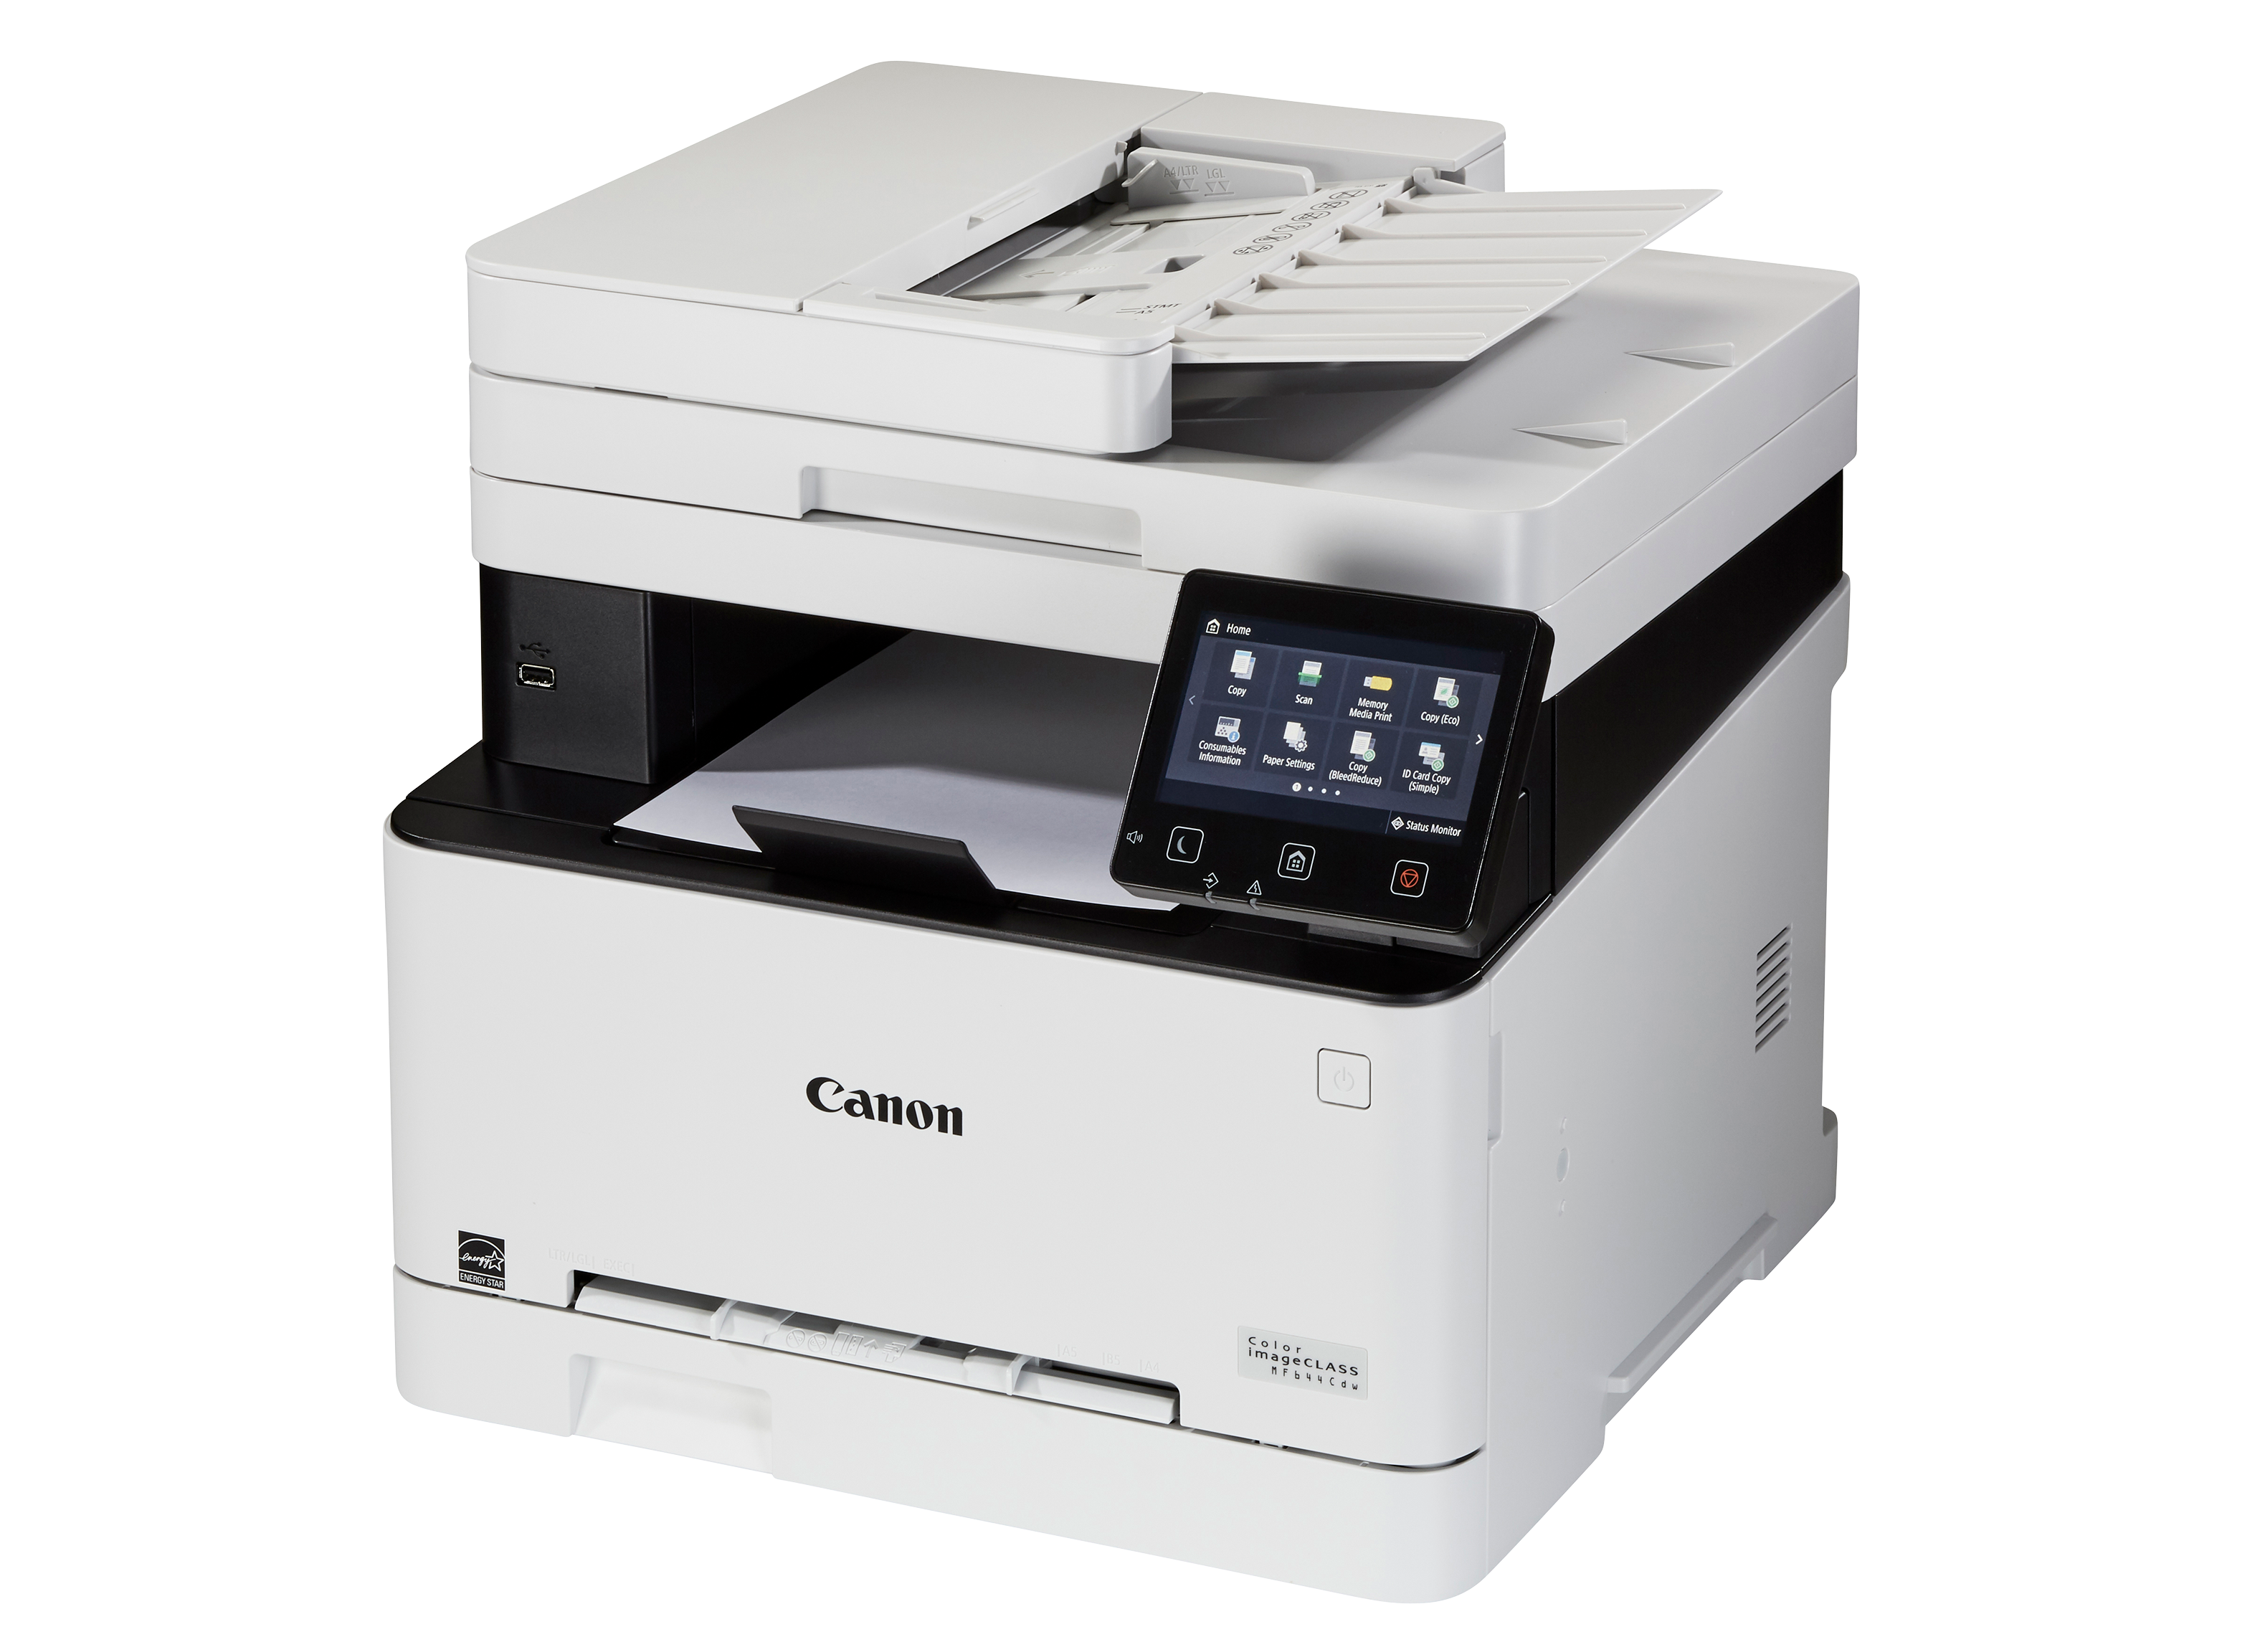 Canon Color imageClass MF644Cdw Printer Review - Consumer Reports